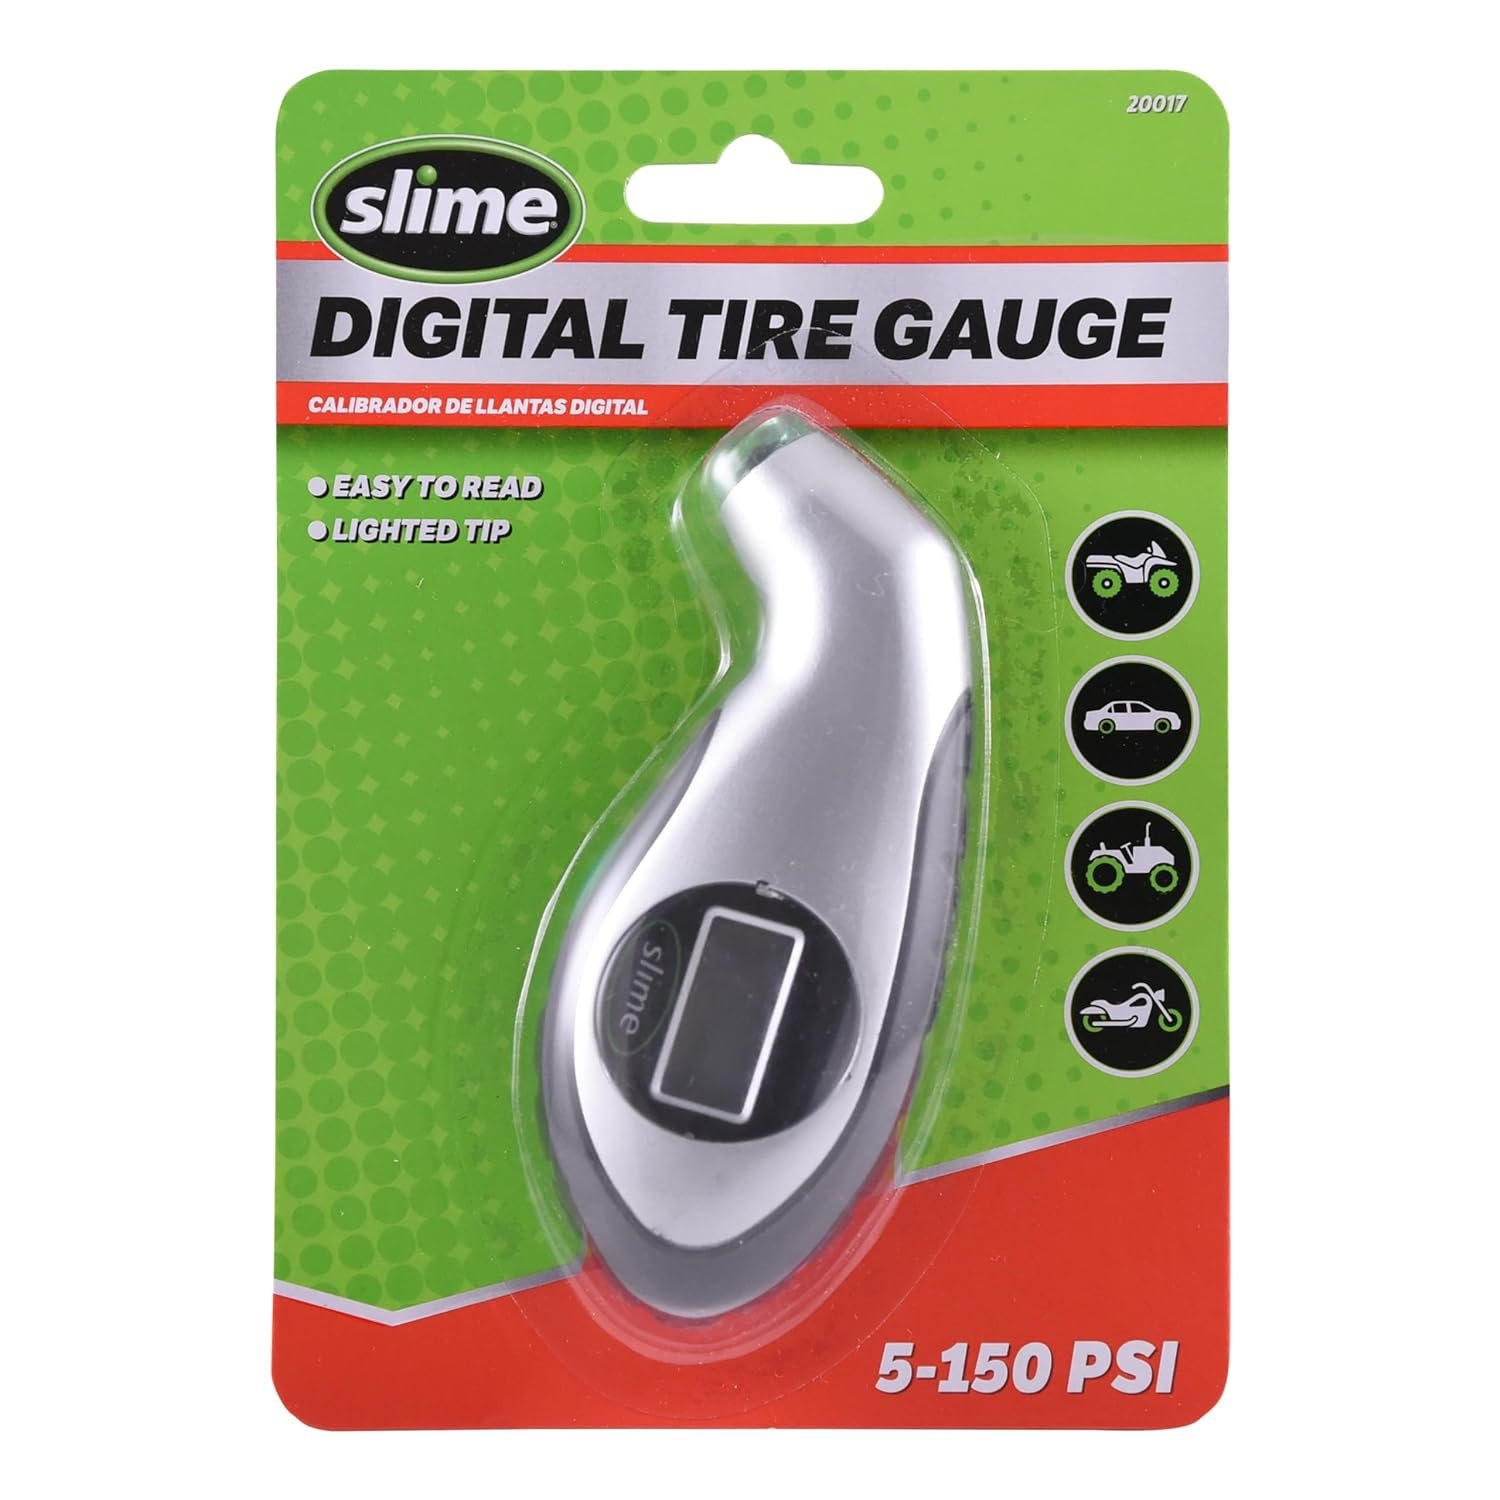 Slime 20017 Tire Pressure Gauge Review